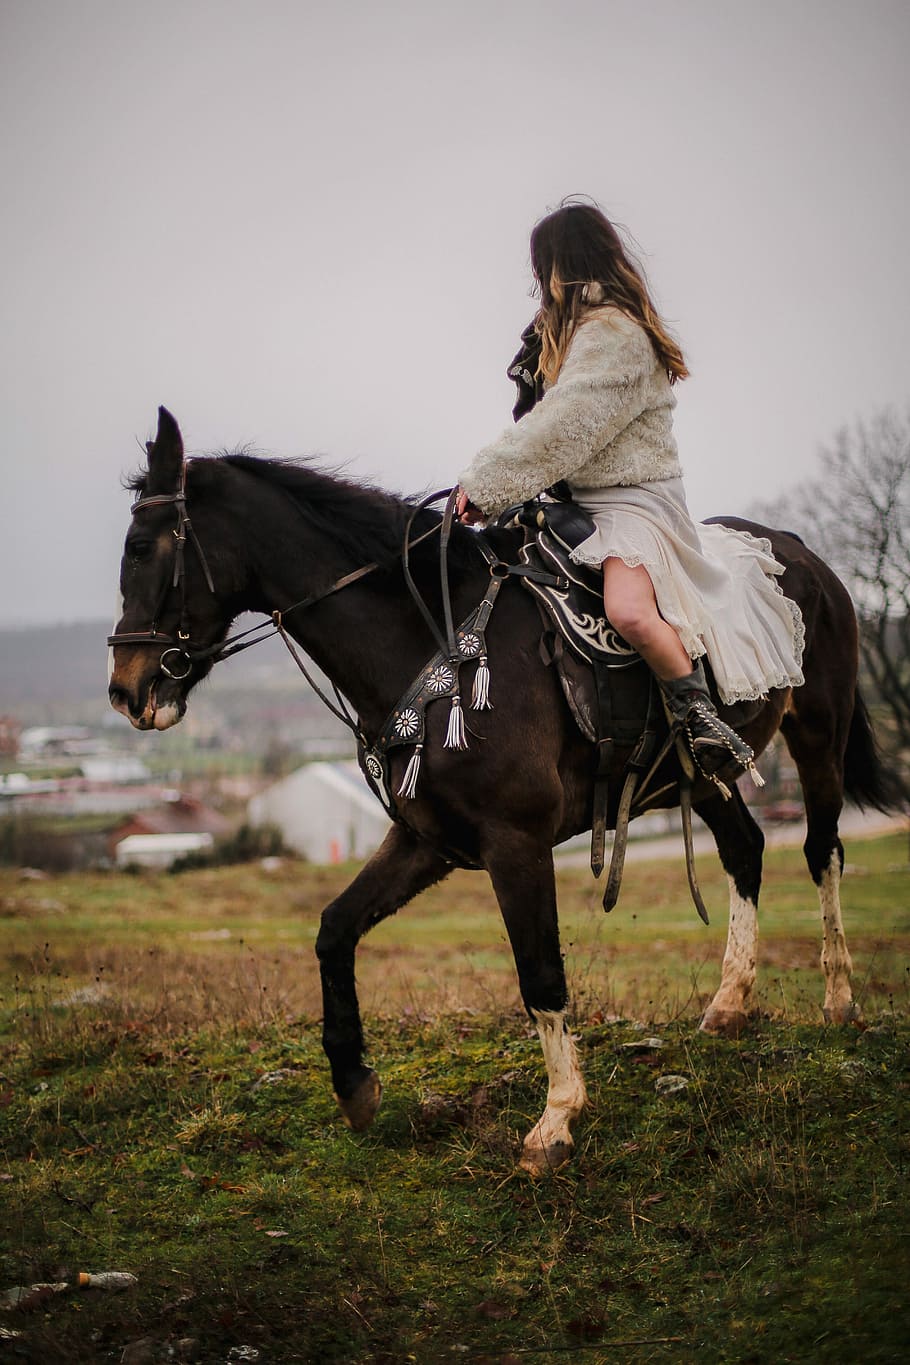 HD wallpaper: Gül Kurtaran, shallow focus photography of woman riding on horse